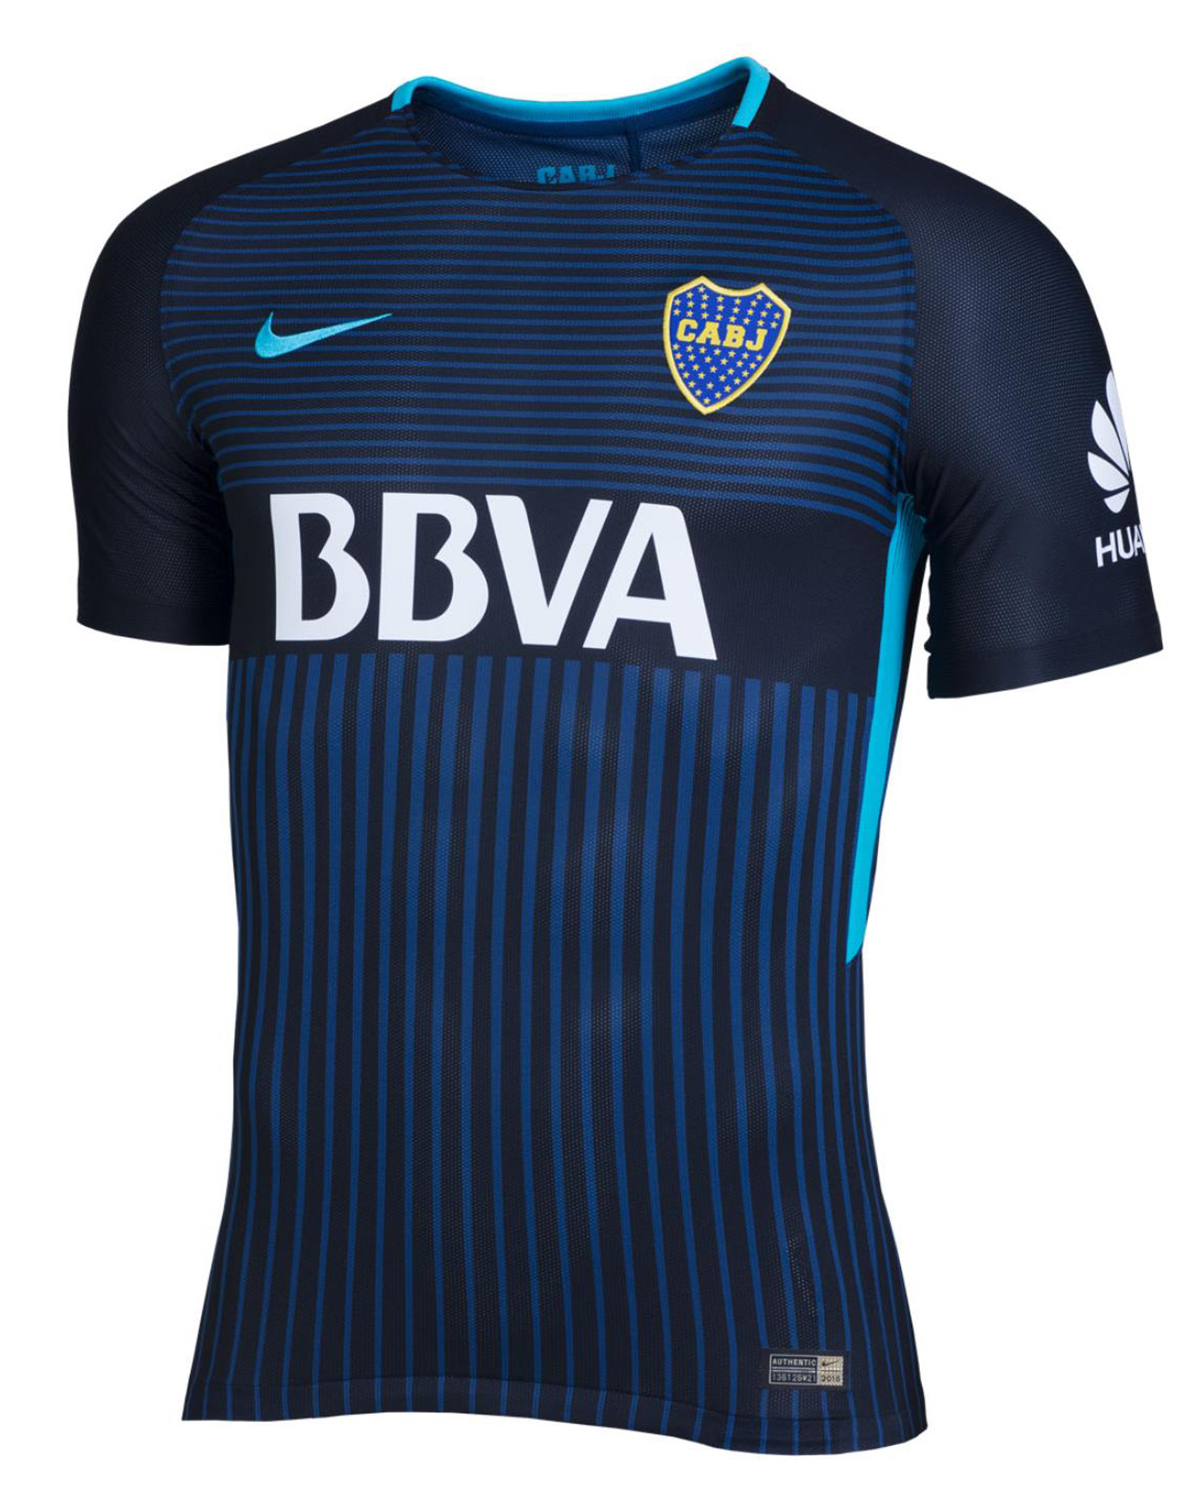 Tercera camiseta Nike de Boca Juniors 2018